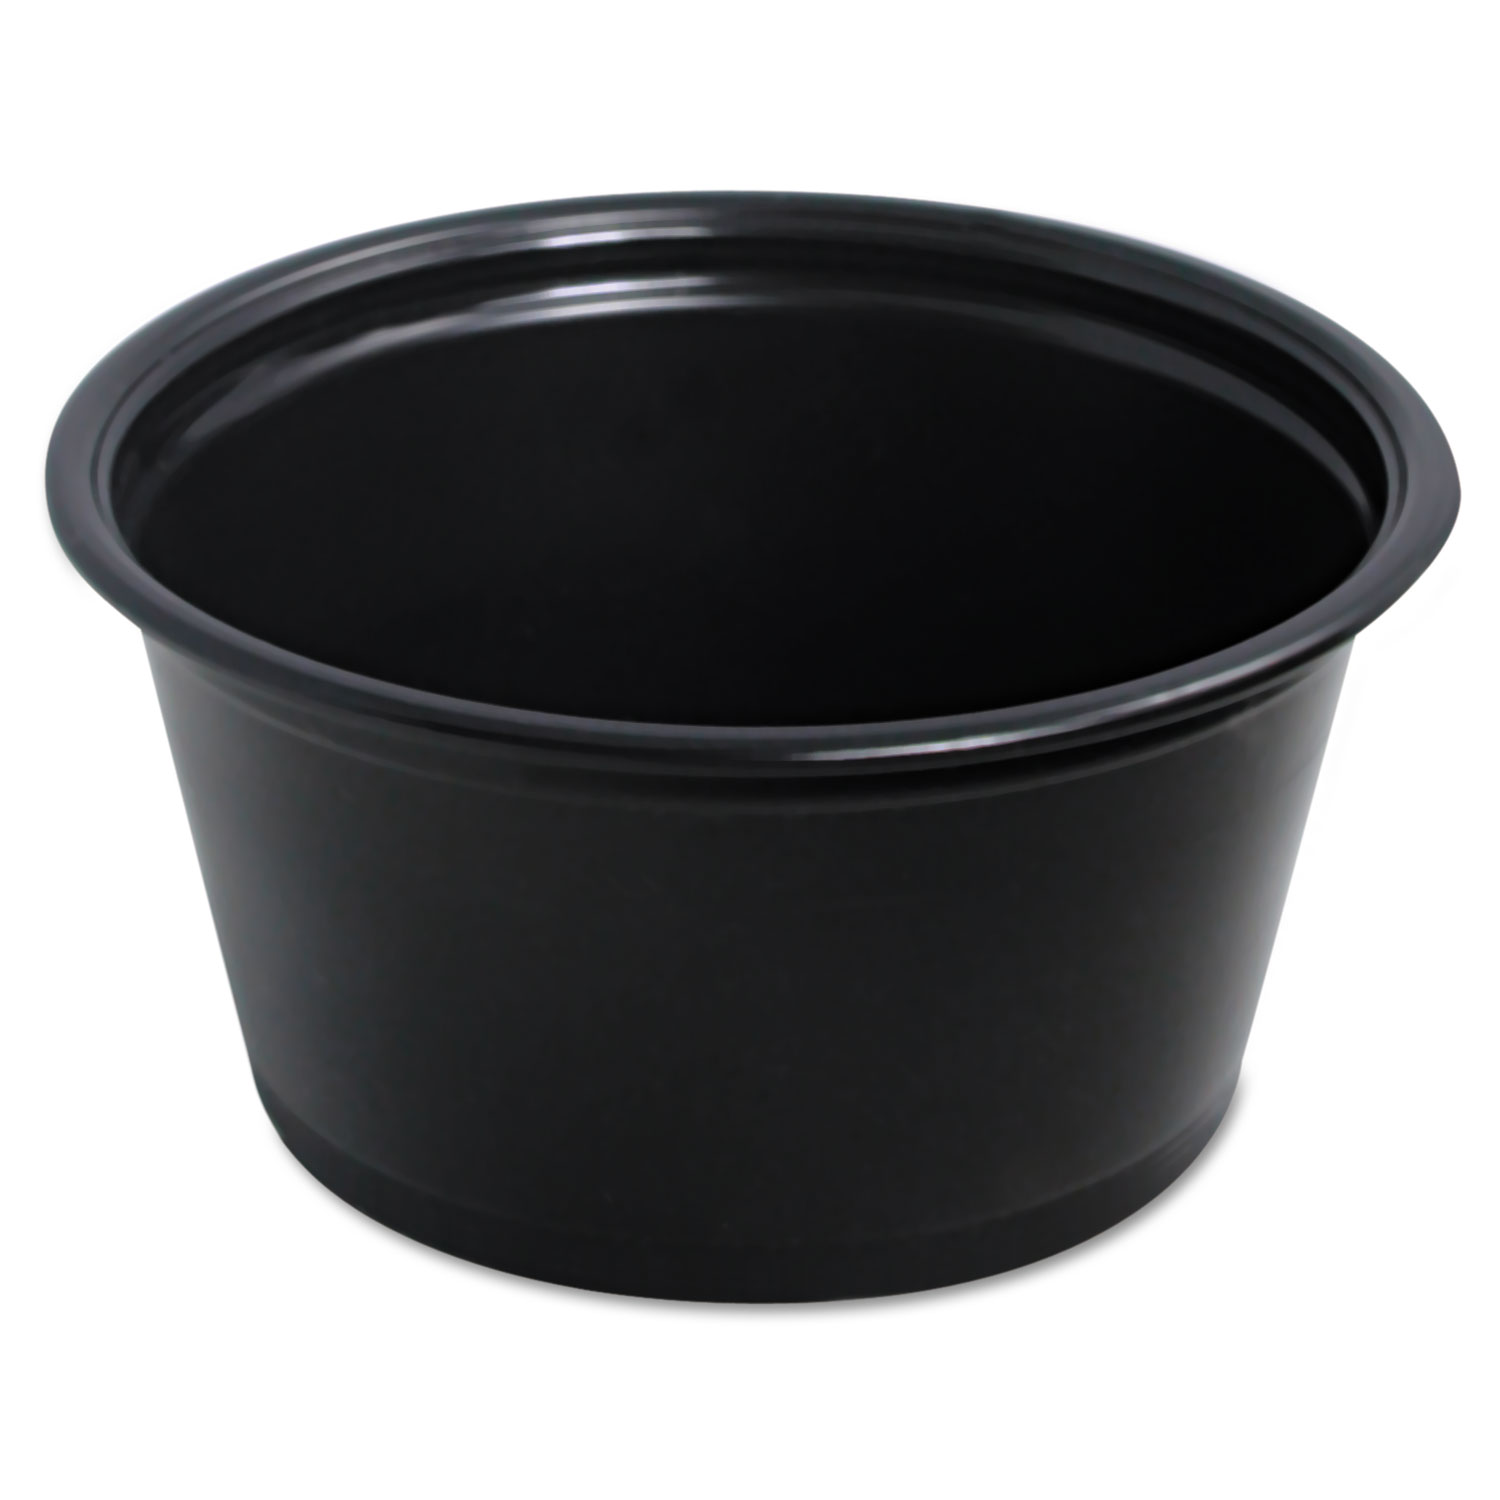 Conex Complements Plastic Portion Cup, 2 oz., Black, 125/Bag, 20 Bags/Carton